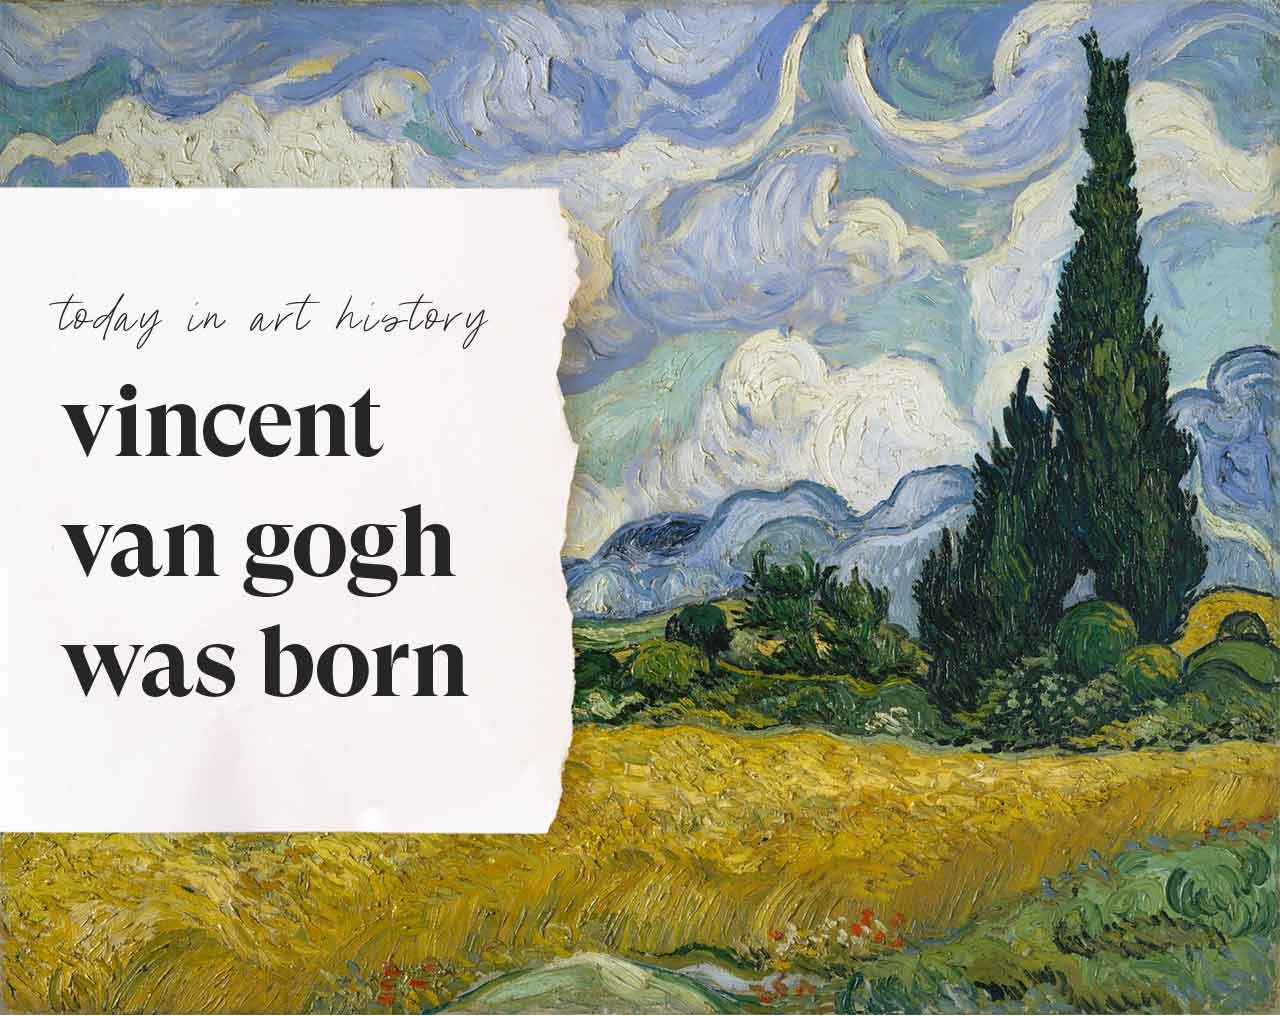 Today in art history Vincent Van Gogh was born.